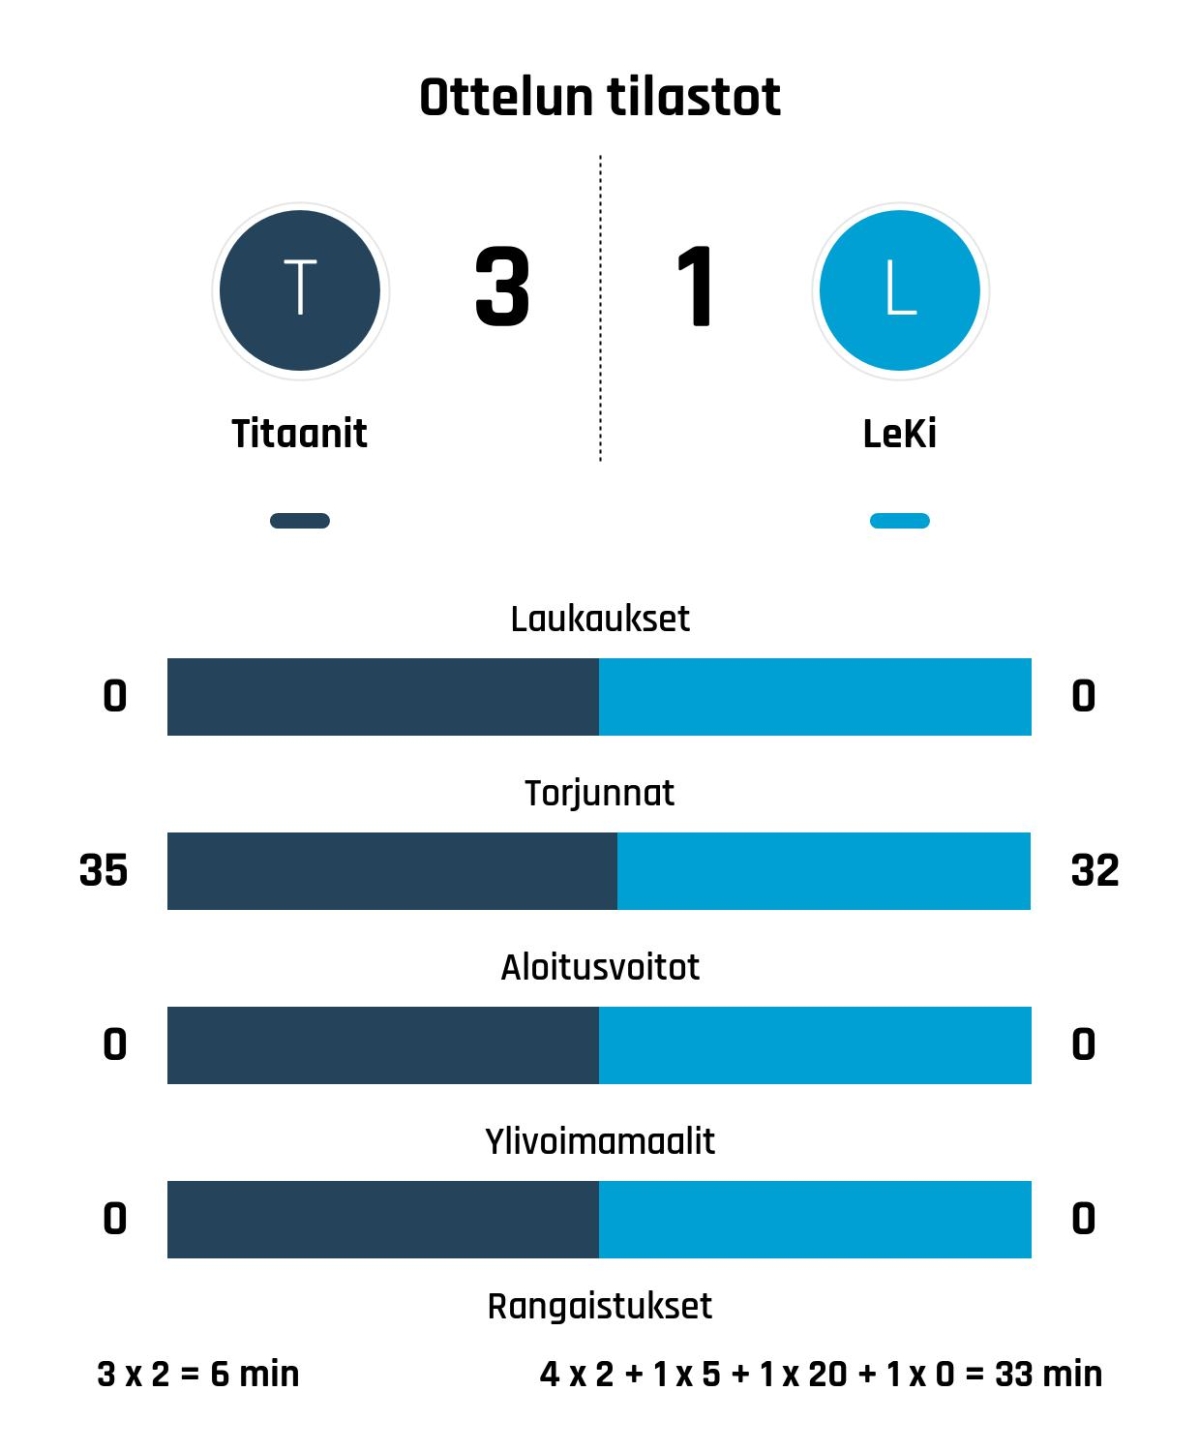 Titaanit nousi rinnalle ja ohi – LeKi kaatui 3-1